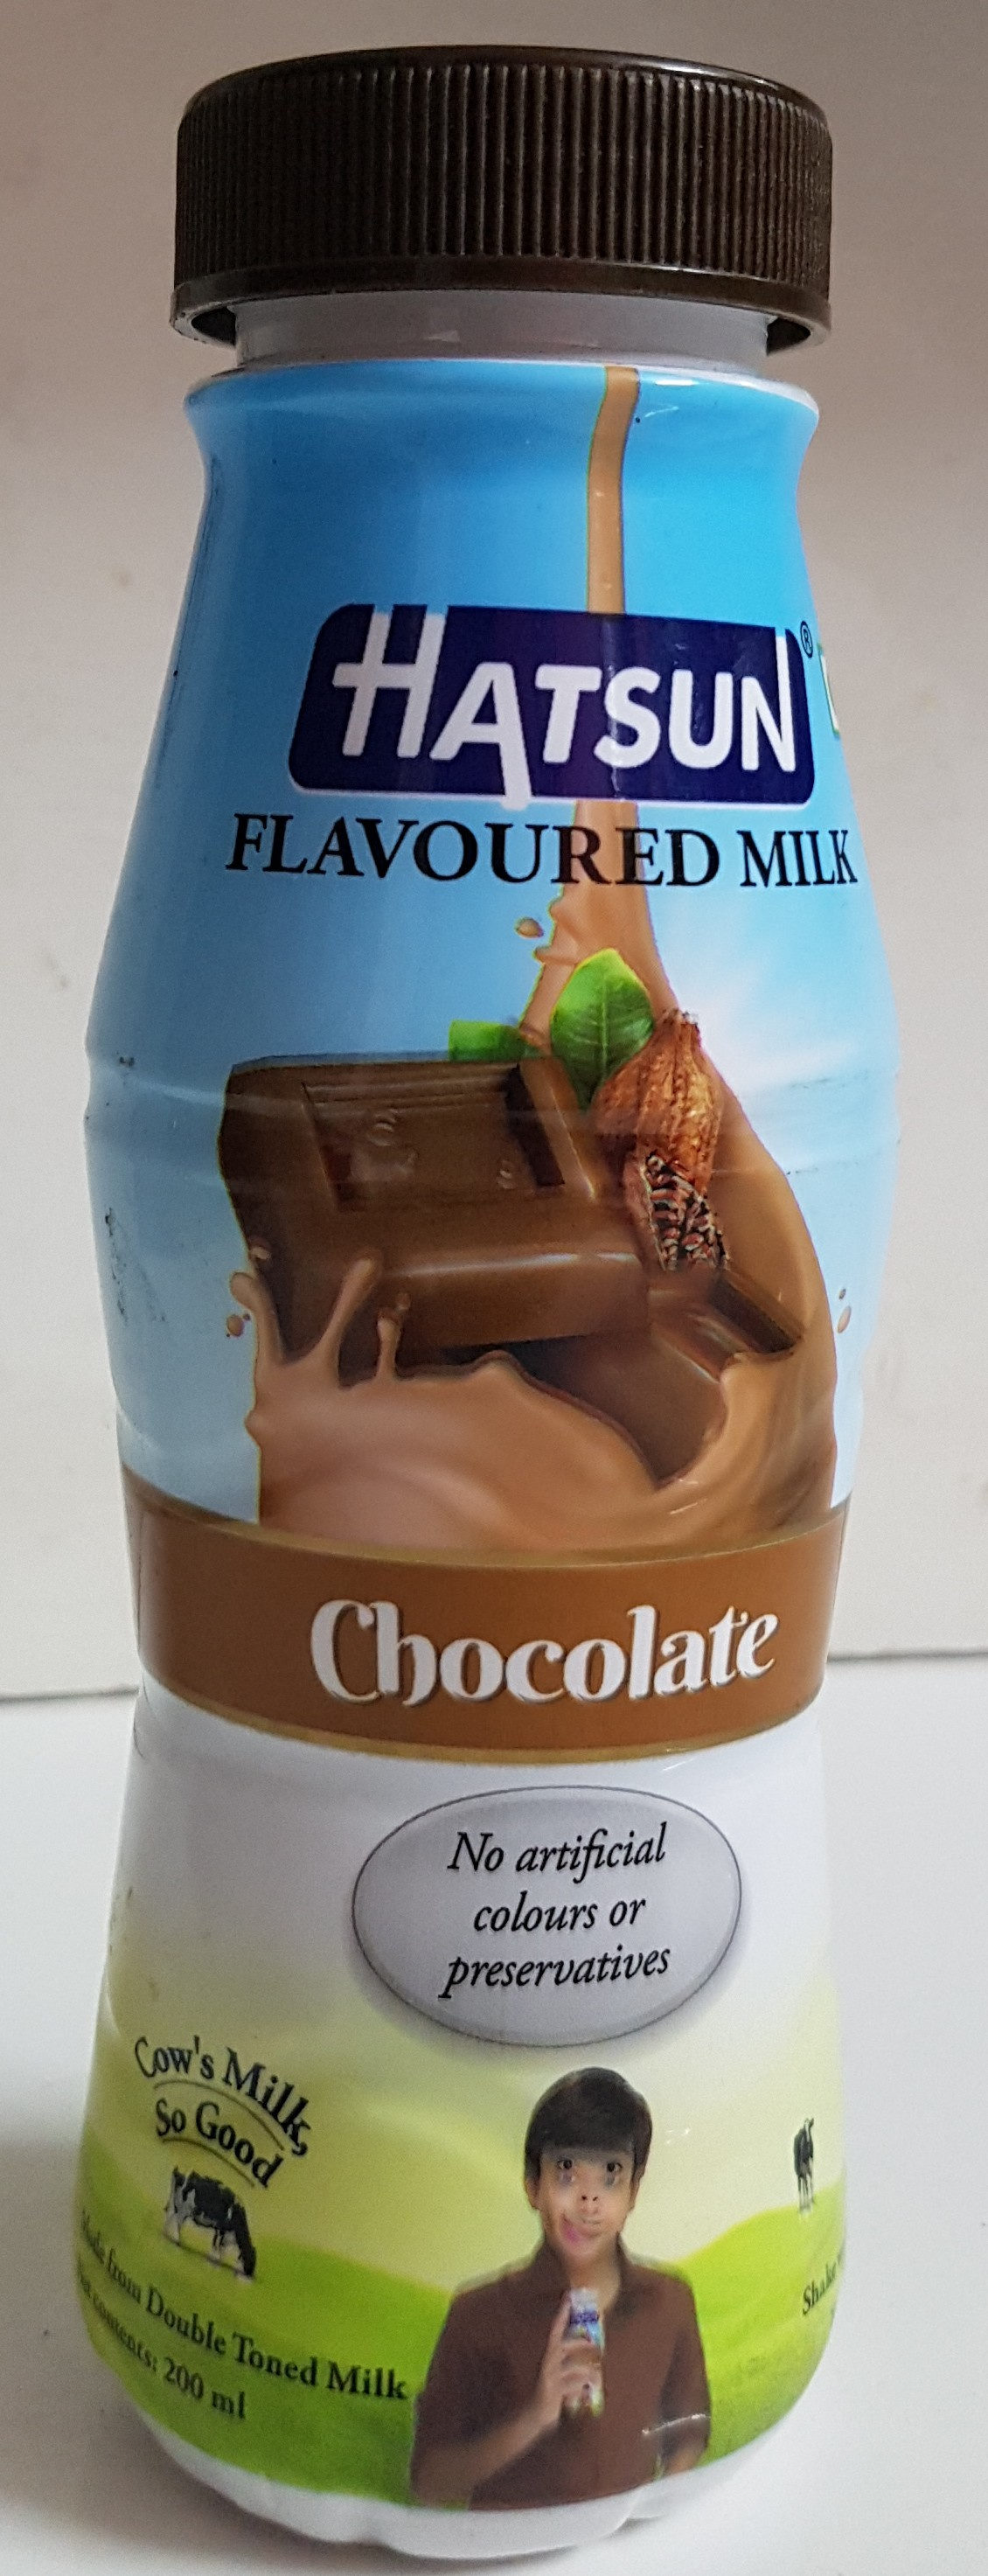 Flaovoured Milk - Chocolate - Product